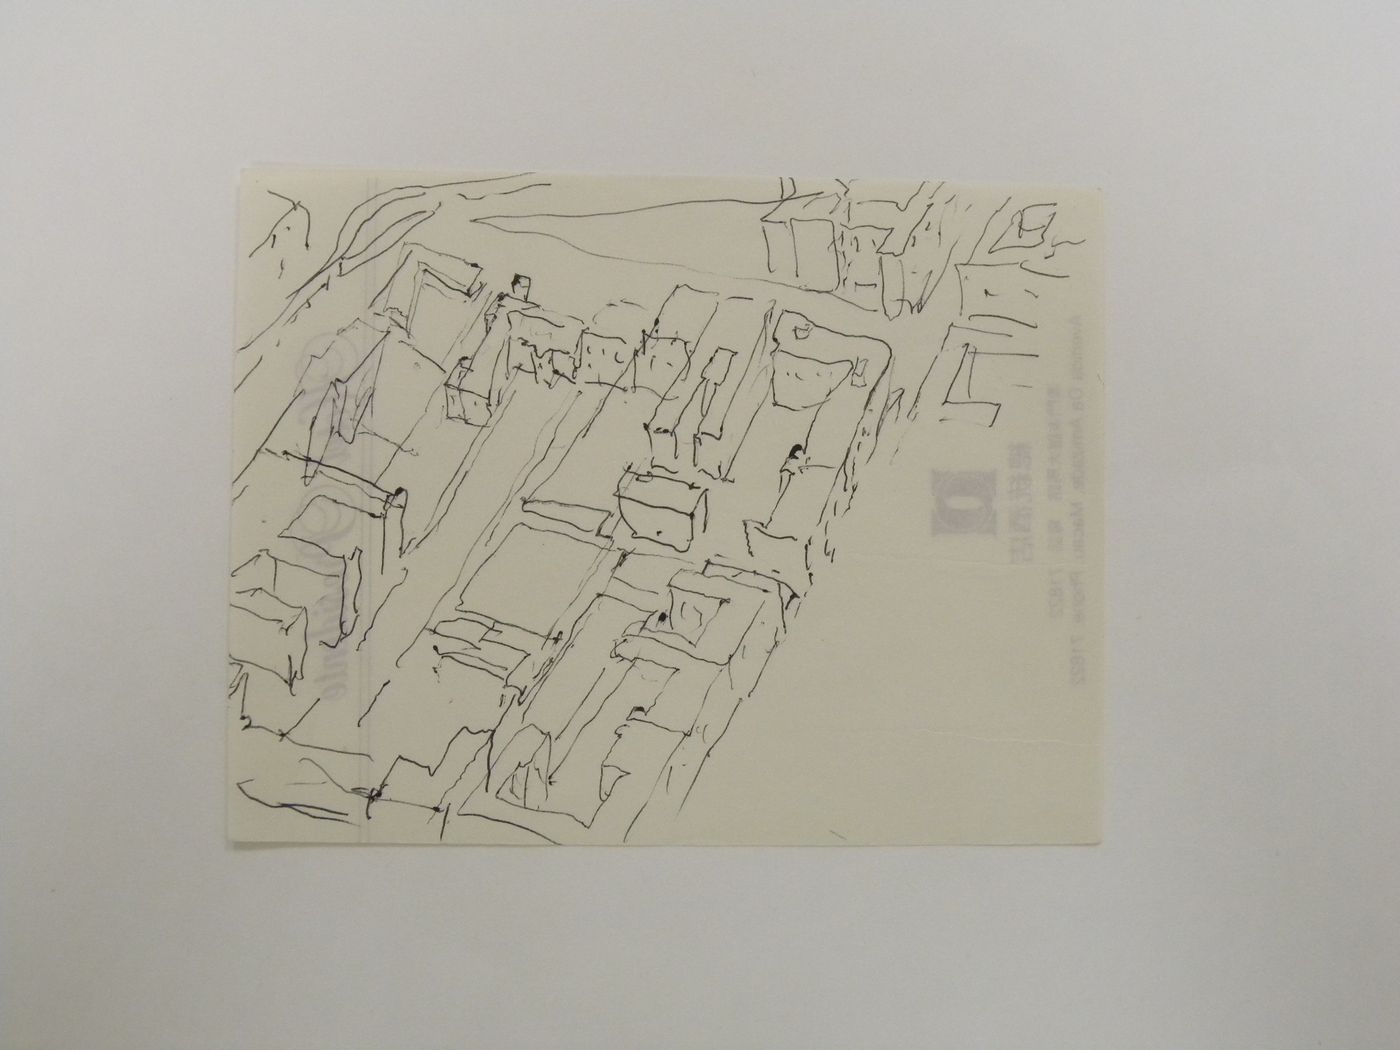 Sketch of proposed design for Block 121 city block, including Bonjour Tristesse, Block 121, Berlin